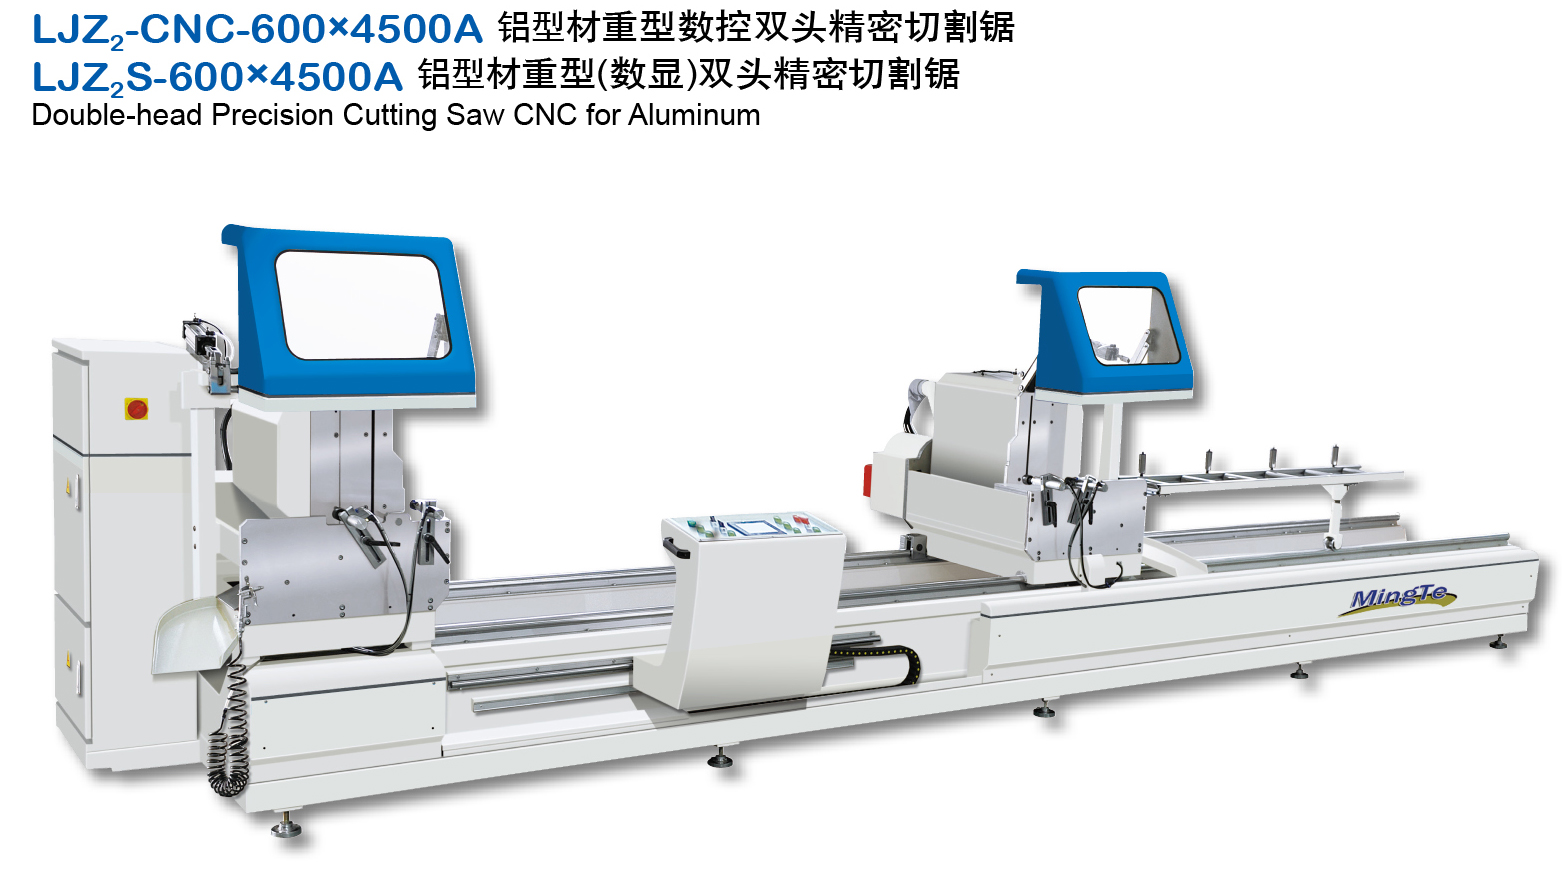 LJZ2-CNC-600×4500A 铝型材重型数控双头精密切割锯